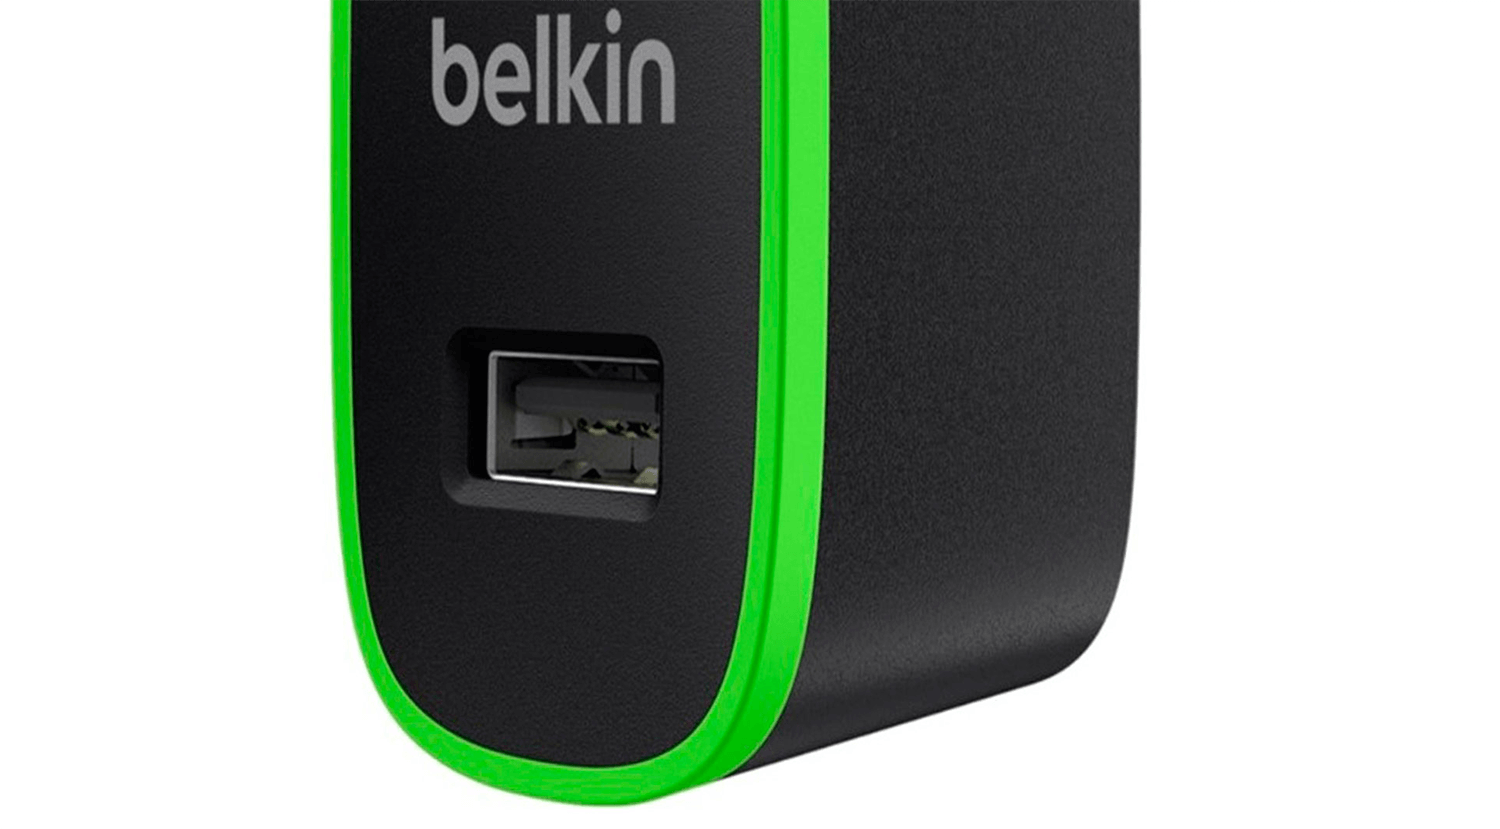 Belkin USB Home Charger F8J052cwBLK